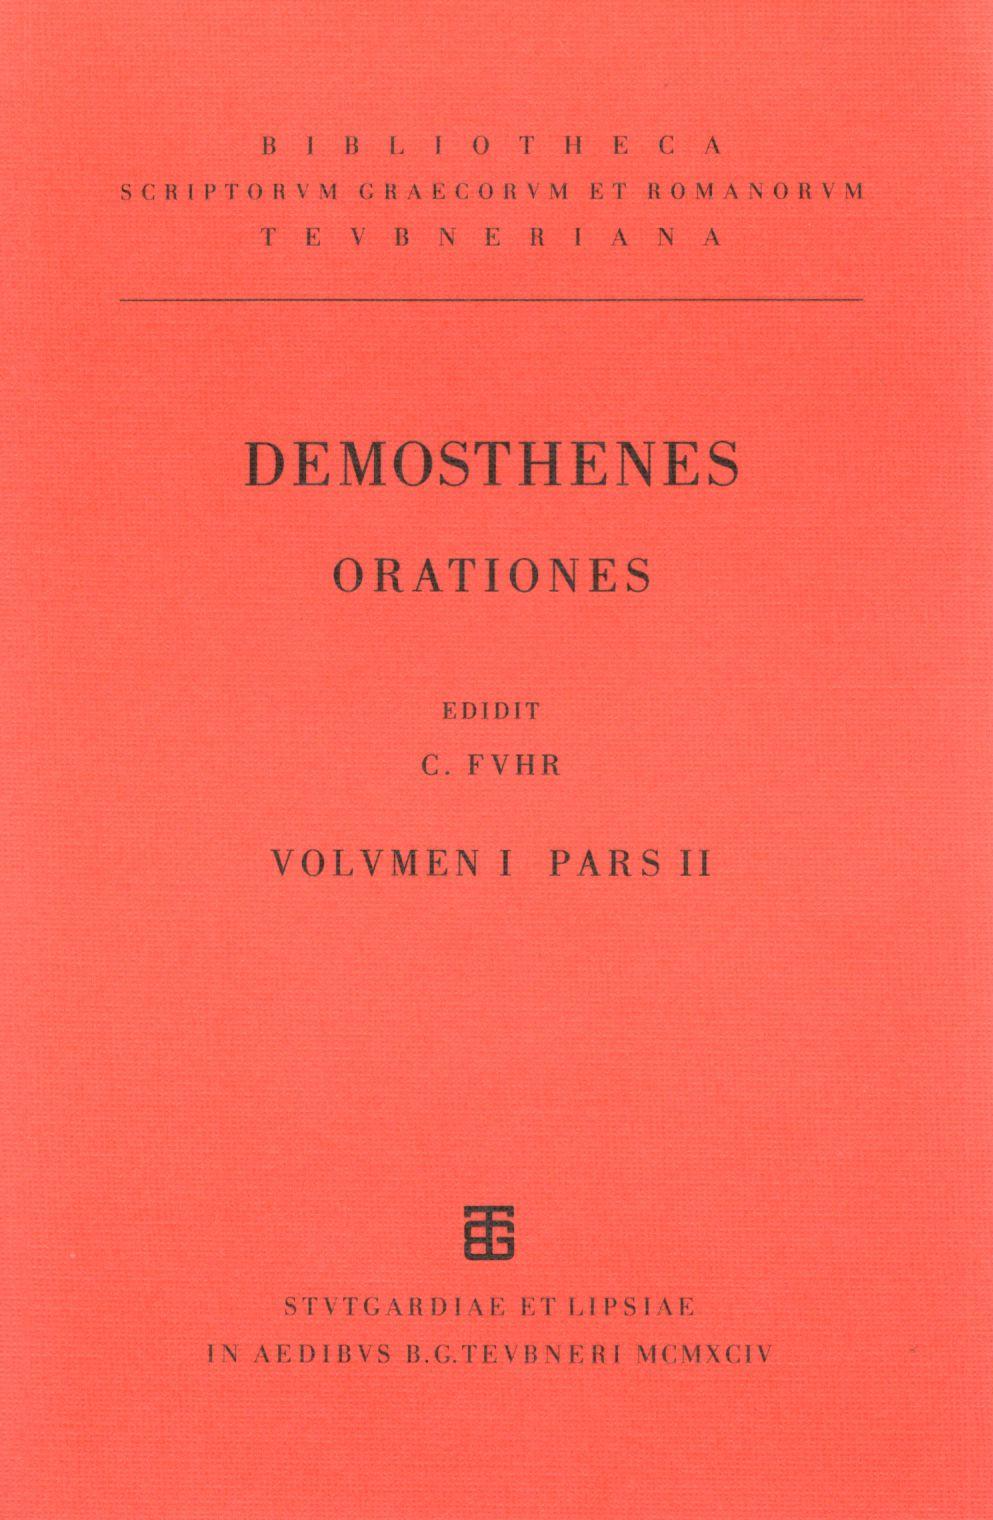 DEMOSTHENIS ORATIONES VOLUME I/PARS II